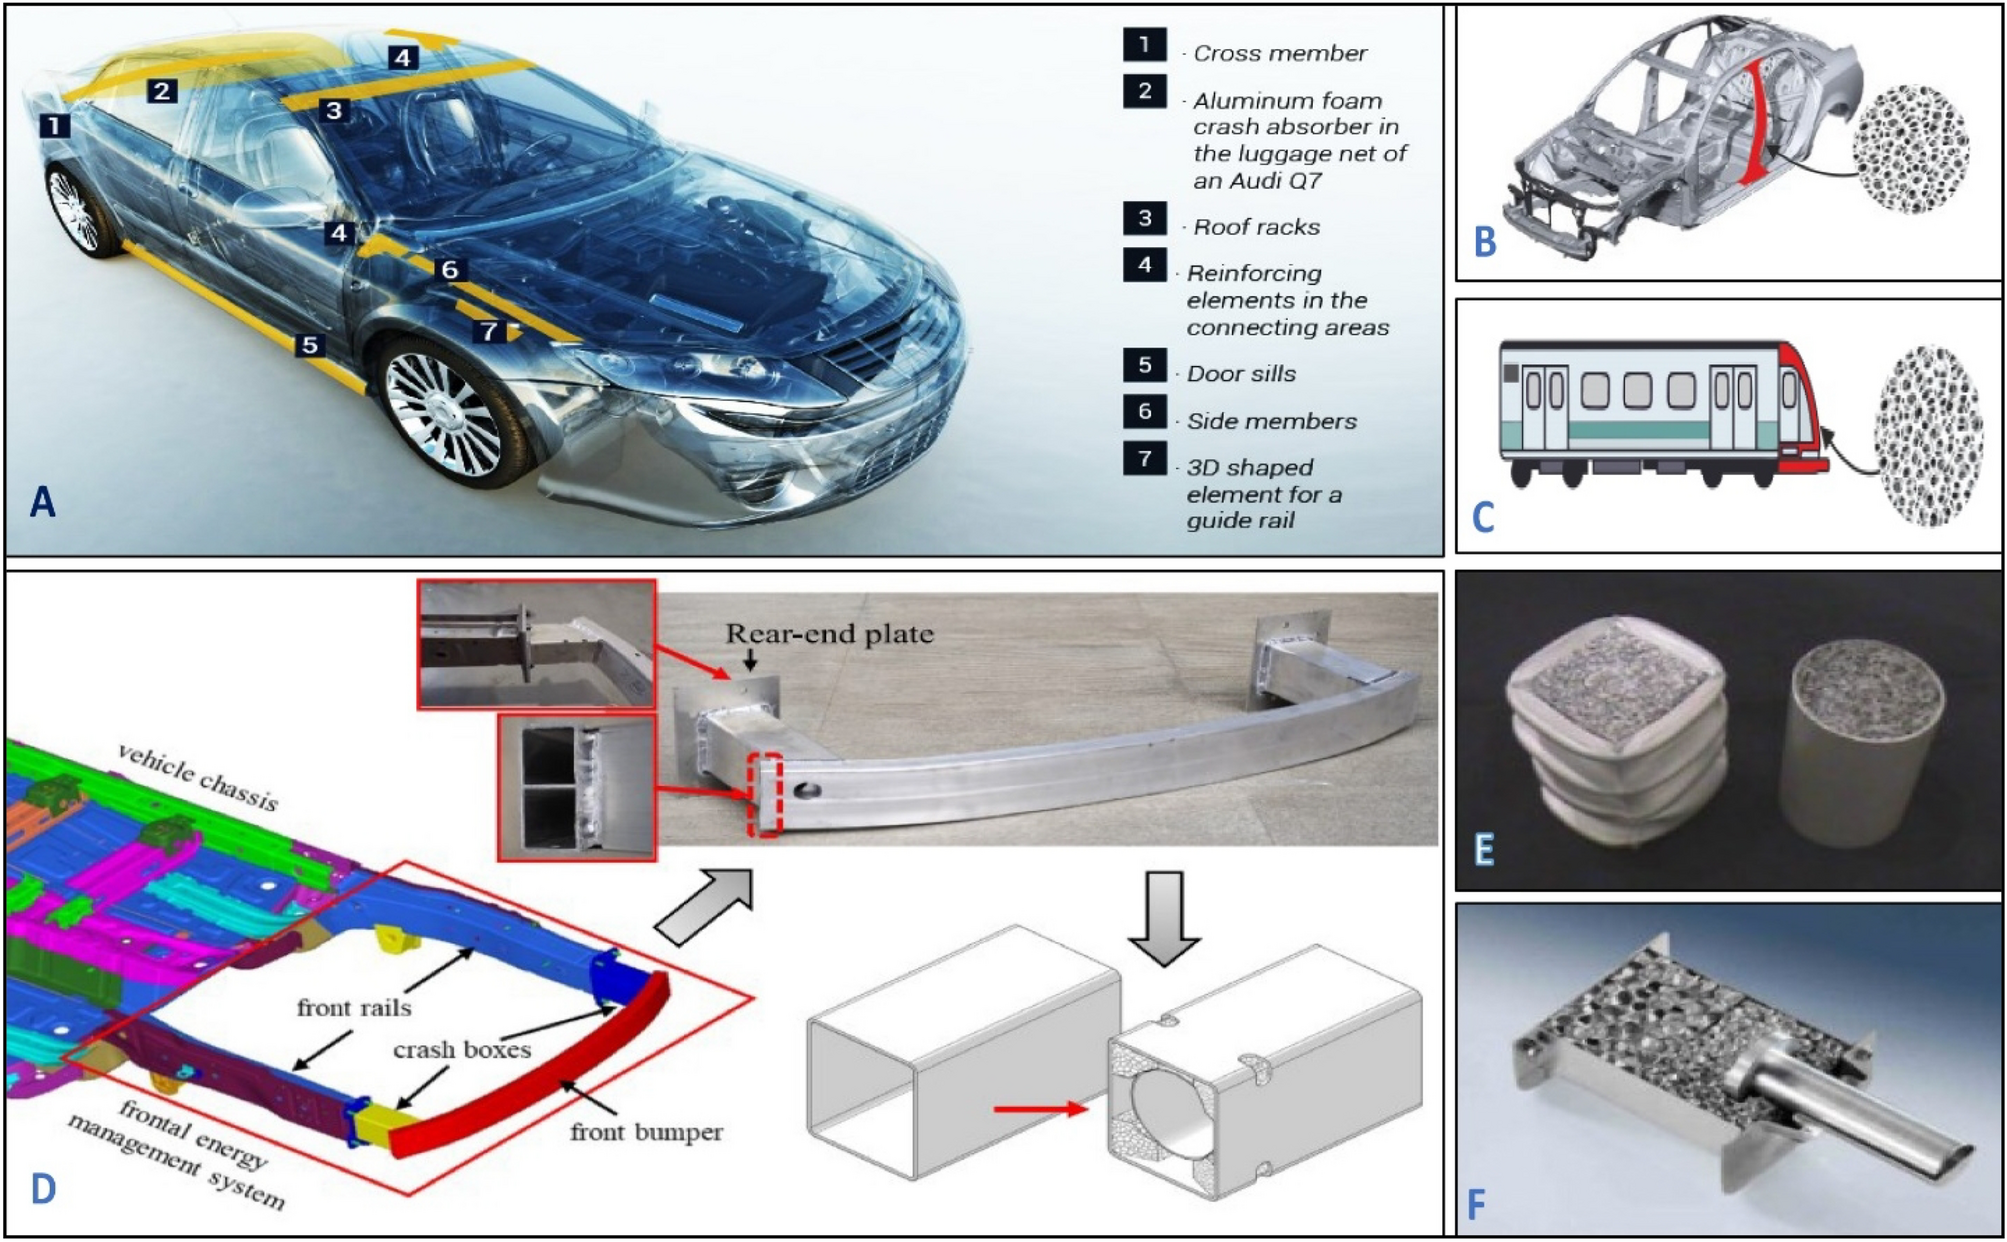 Aluminum foam 3D model  Download Scientific Diagram